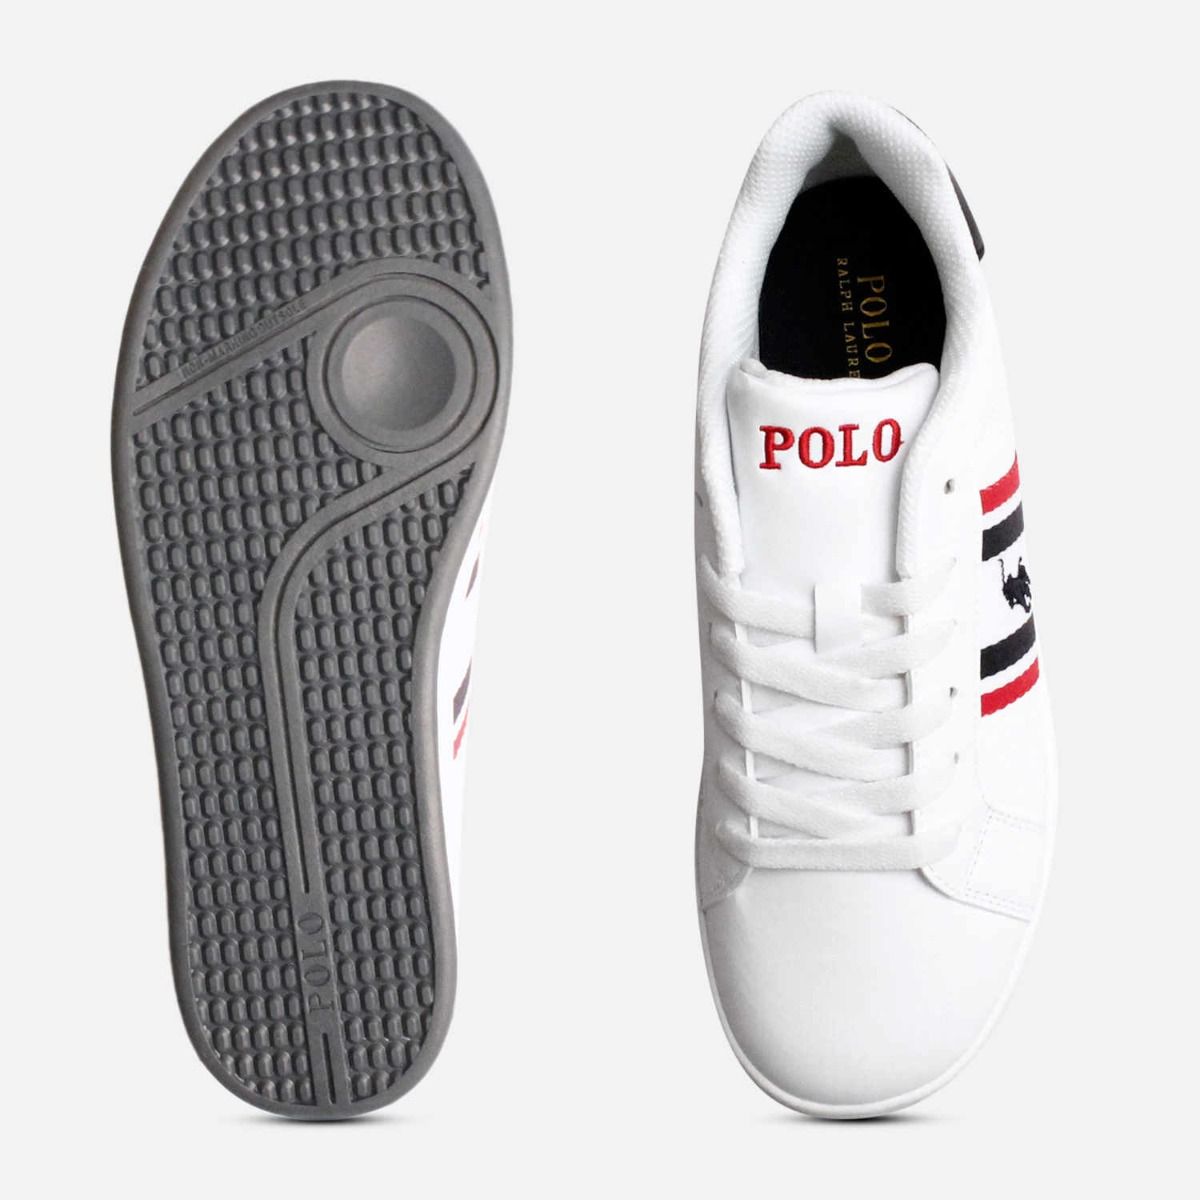 polo 2 series shoes